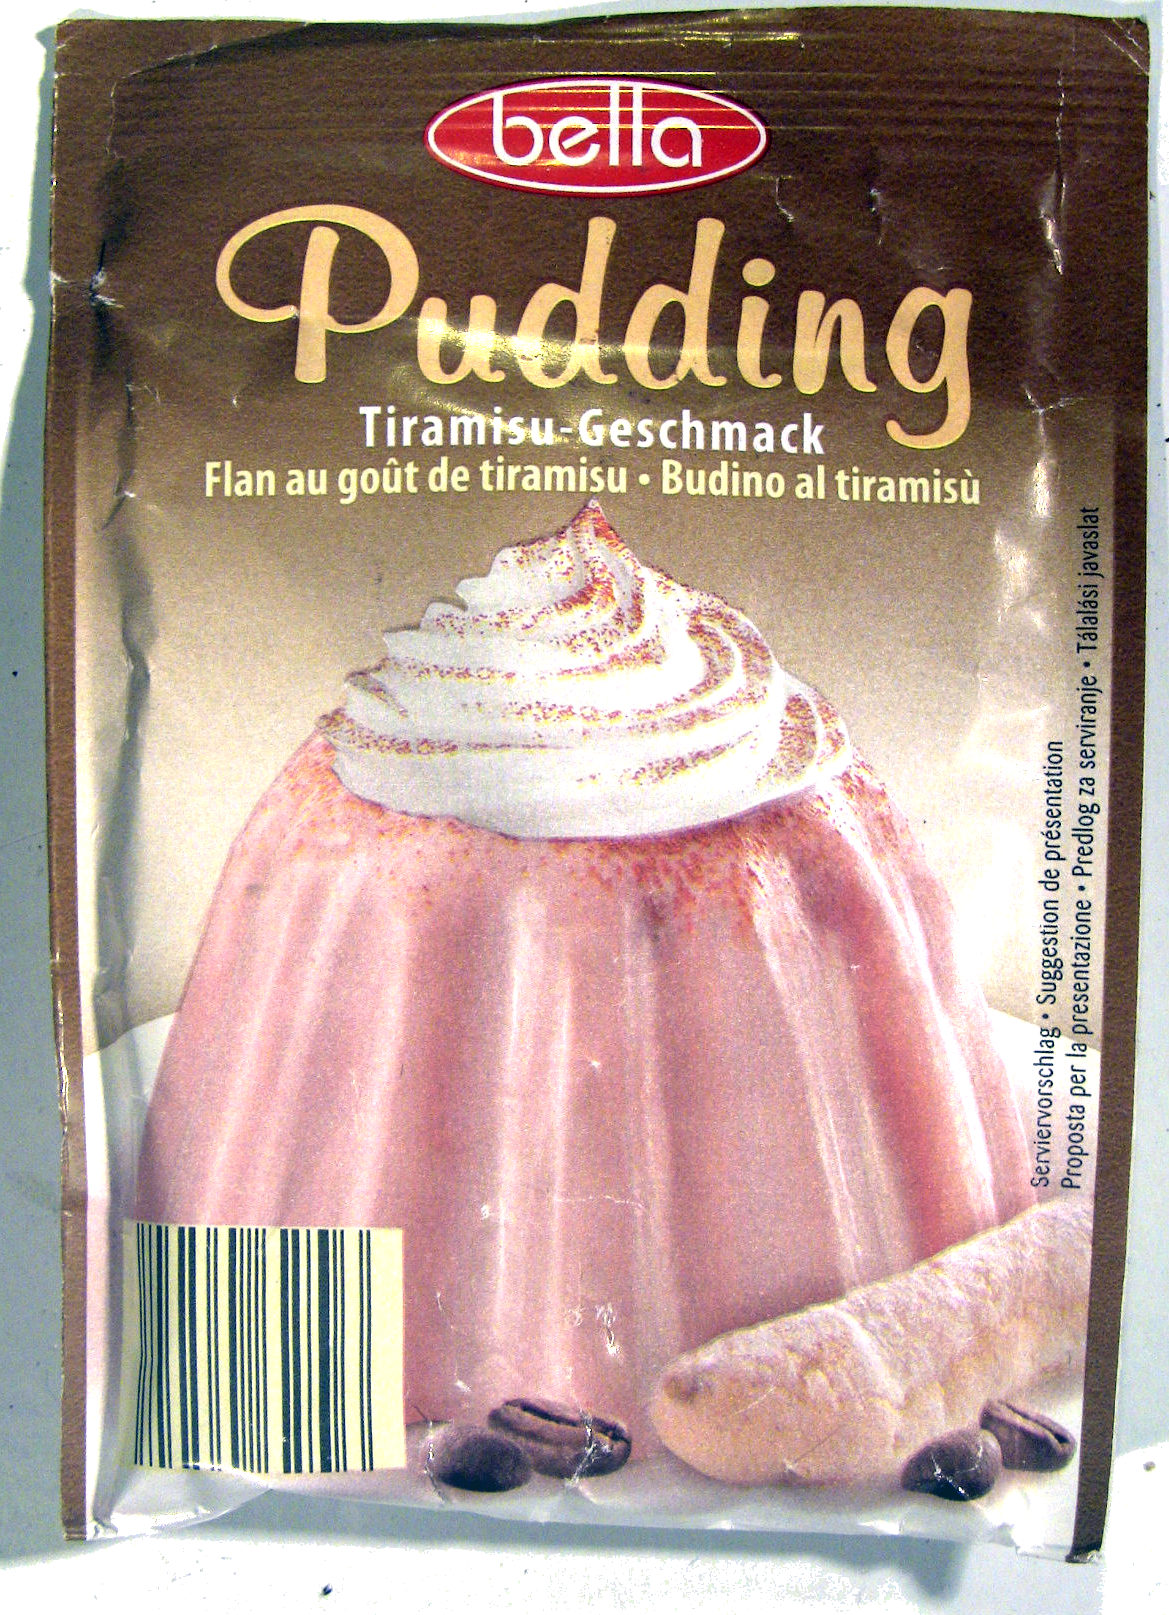 Bella Pudding Tiramisu-Geschmack - Product - de